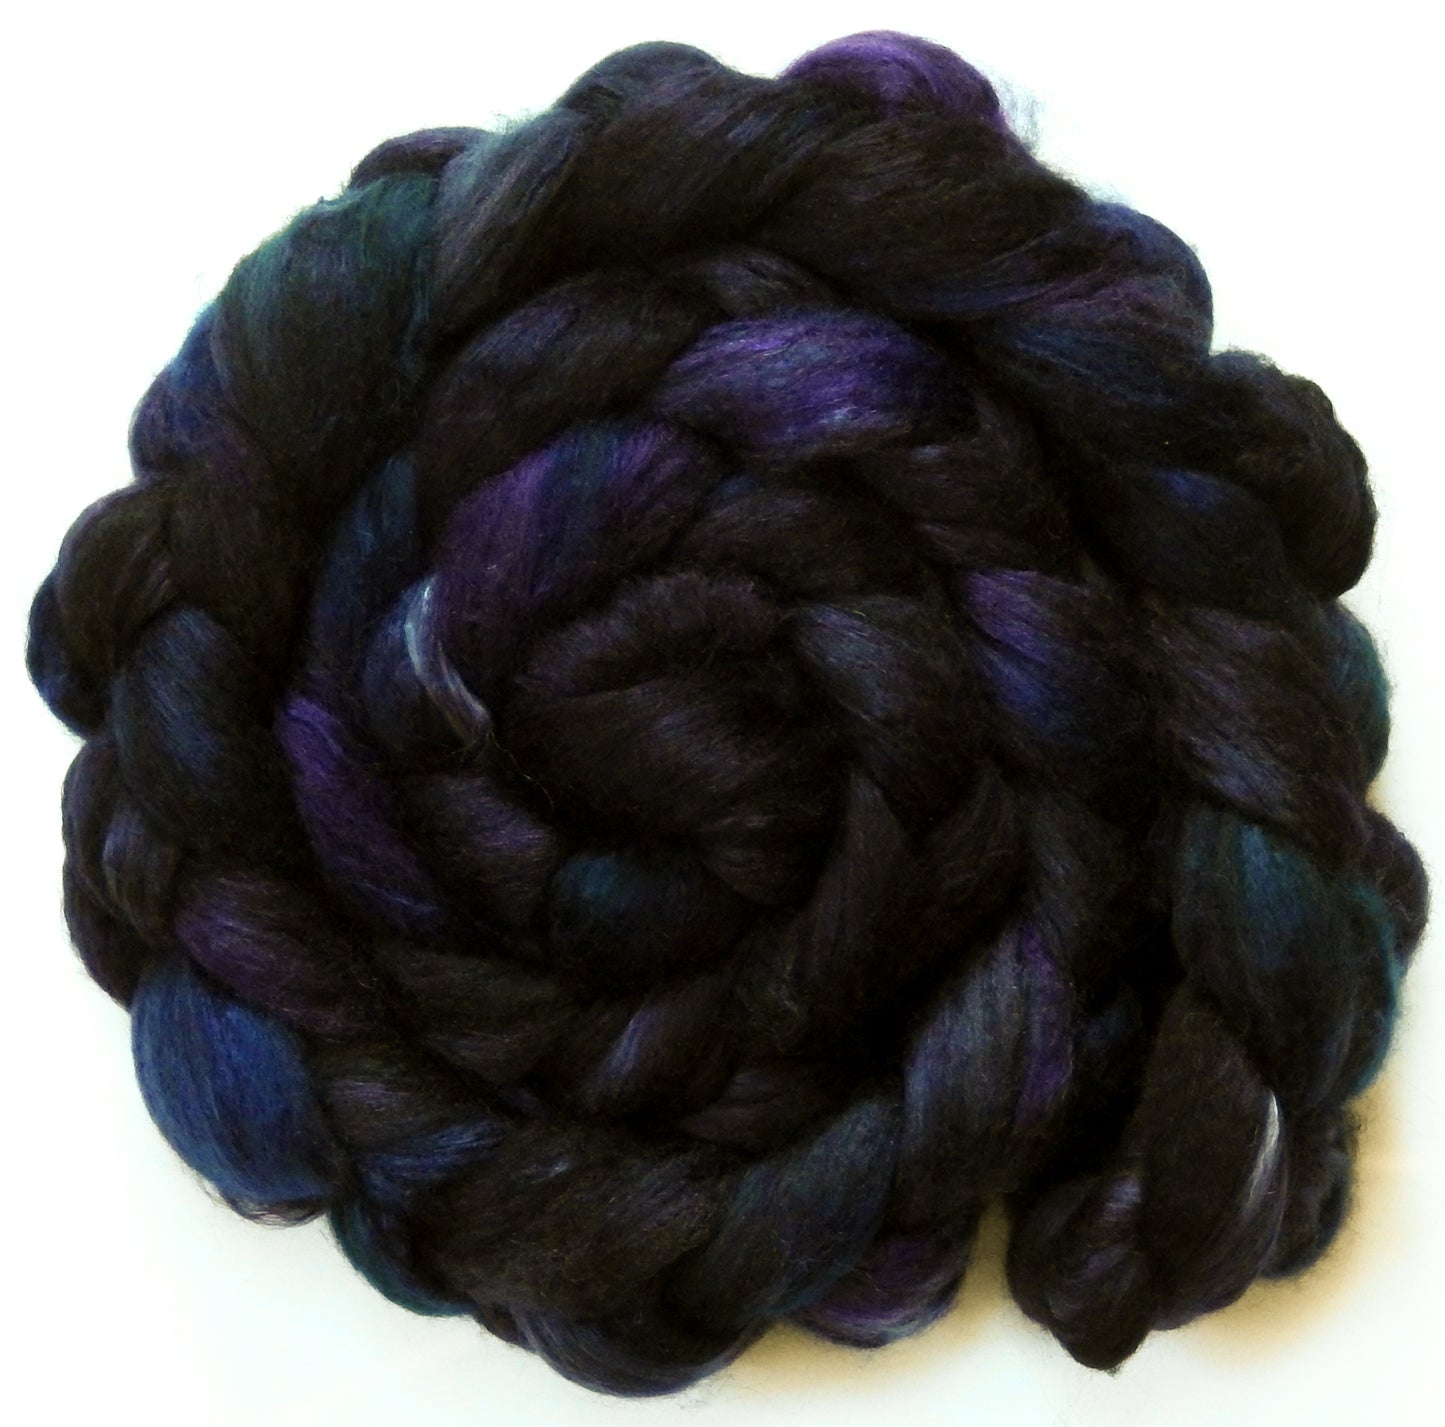 Raven - Batt in a Braid #54- Bleached YAK/Polwarth / Mulberry Silk (40/40/20)